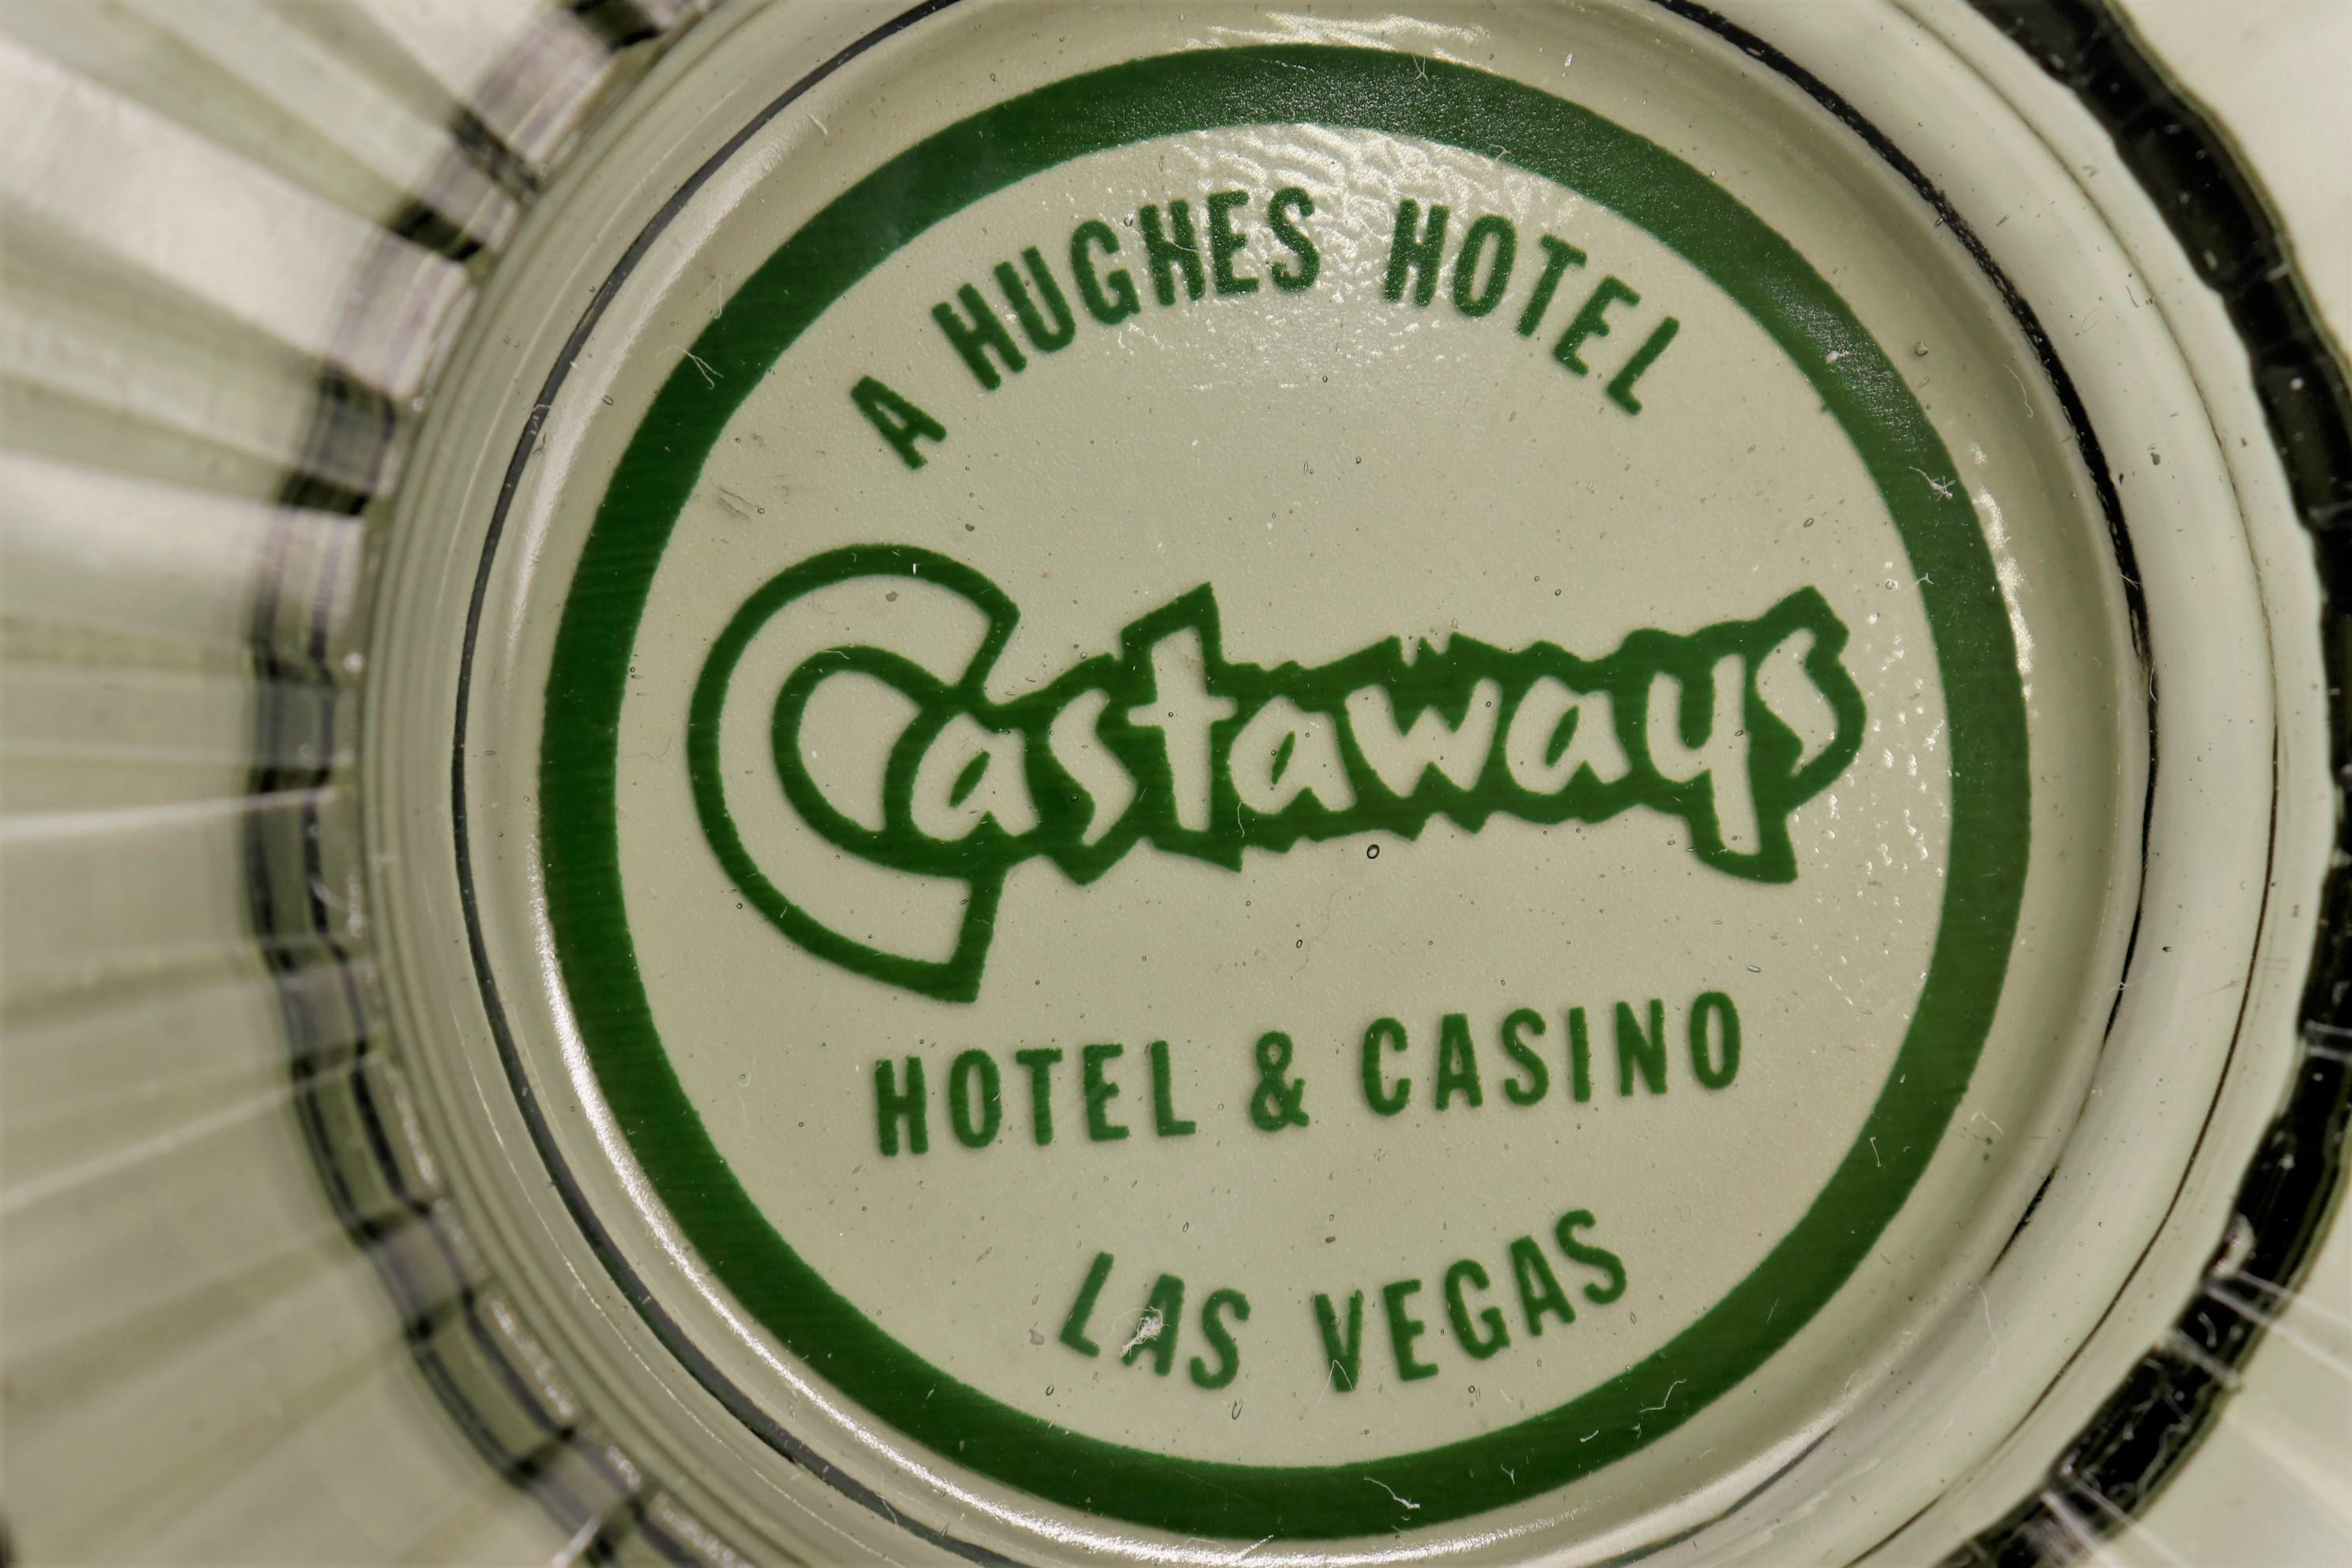 Castaways Hotel Las Vegas Glass Ashtray In Good Condition For Sale In Bradenton, FL